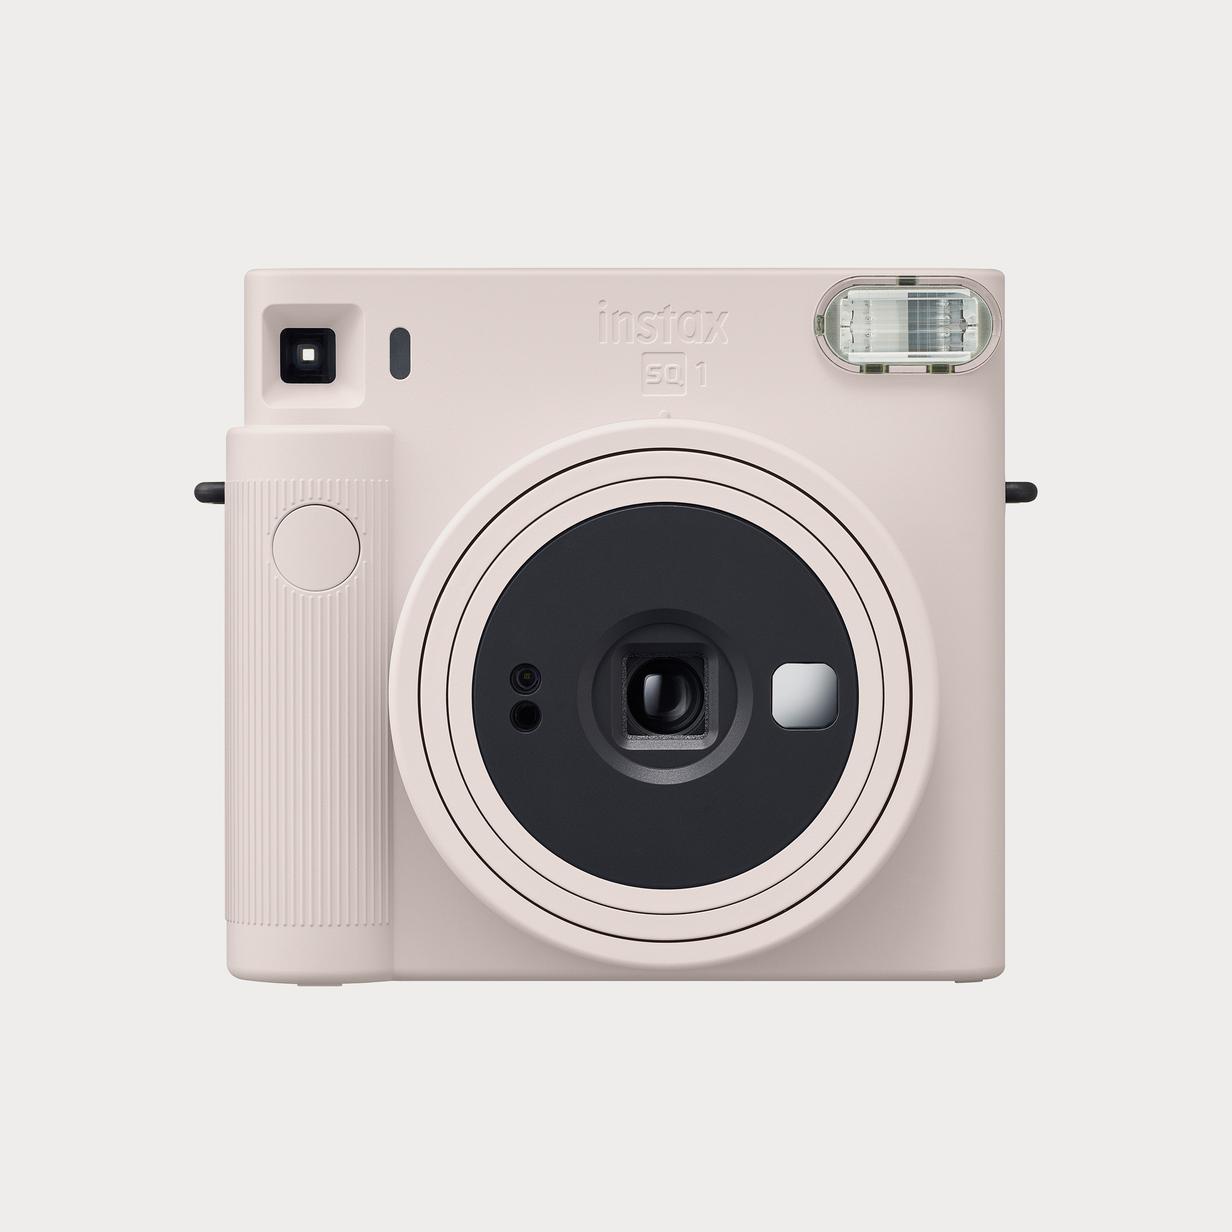 shopmoment.com | Instax Square SQ1 Instant Camera